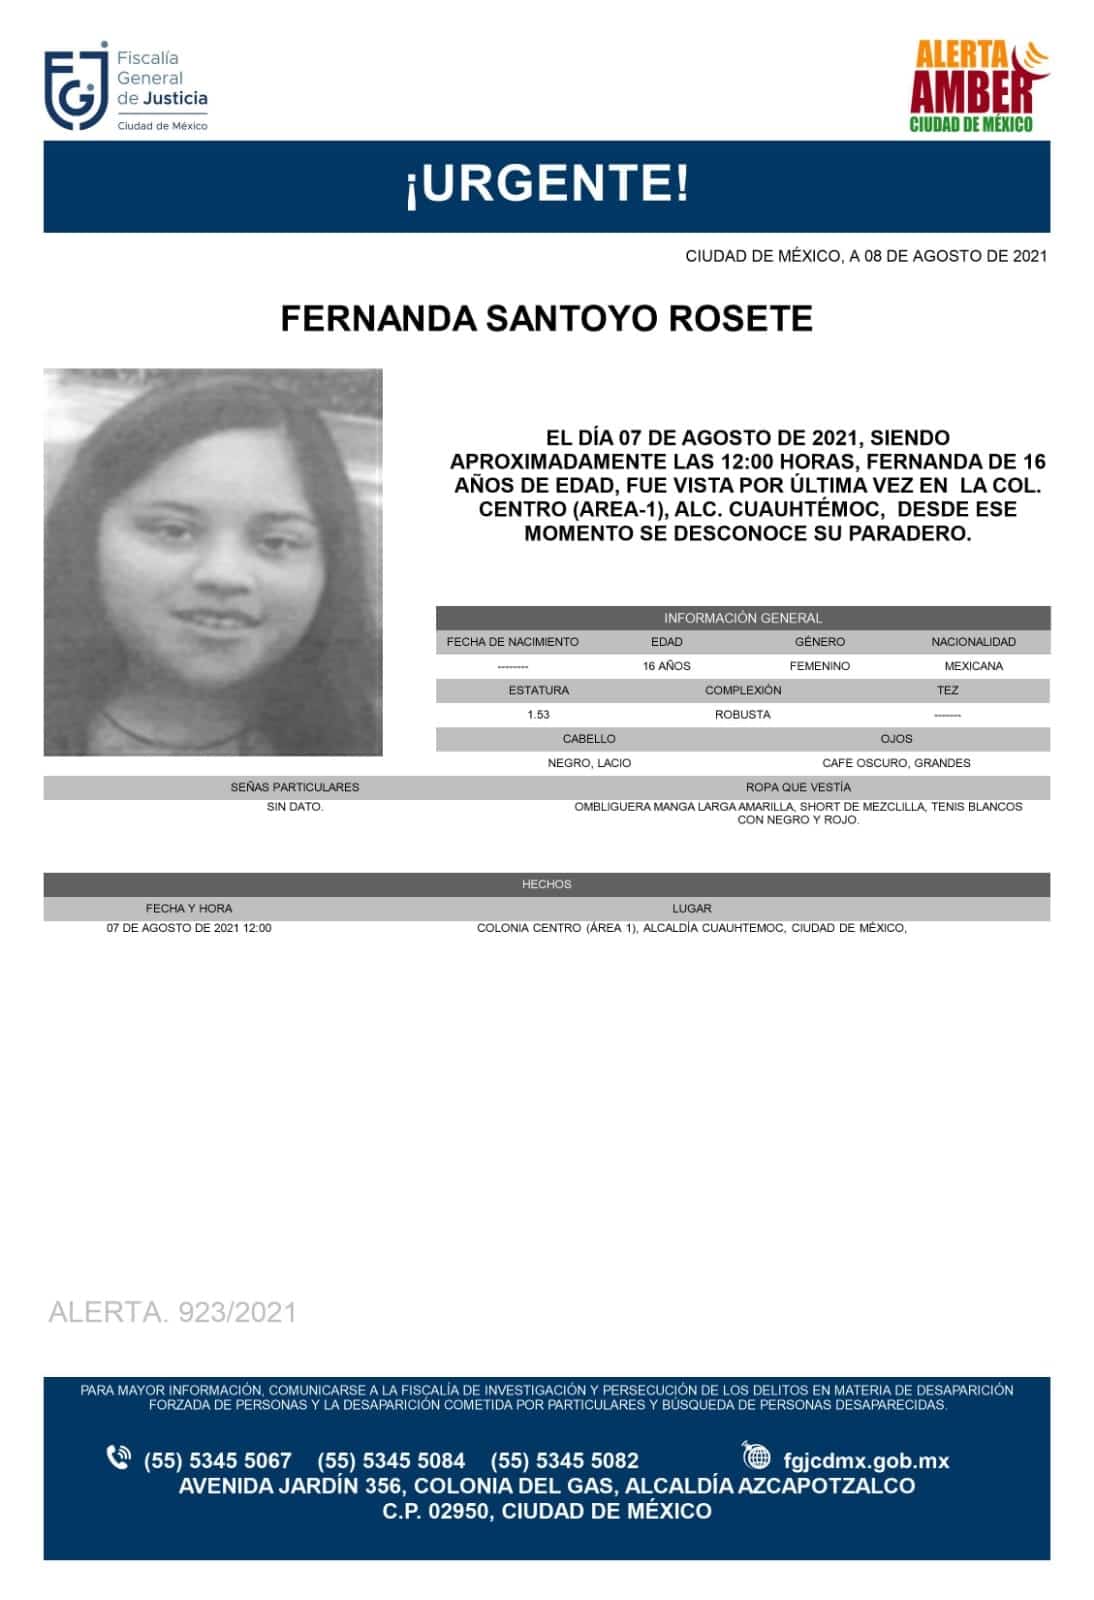 Activan Alerta Amber para Fernanda Santoyo Rosete